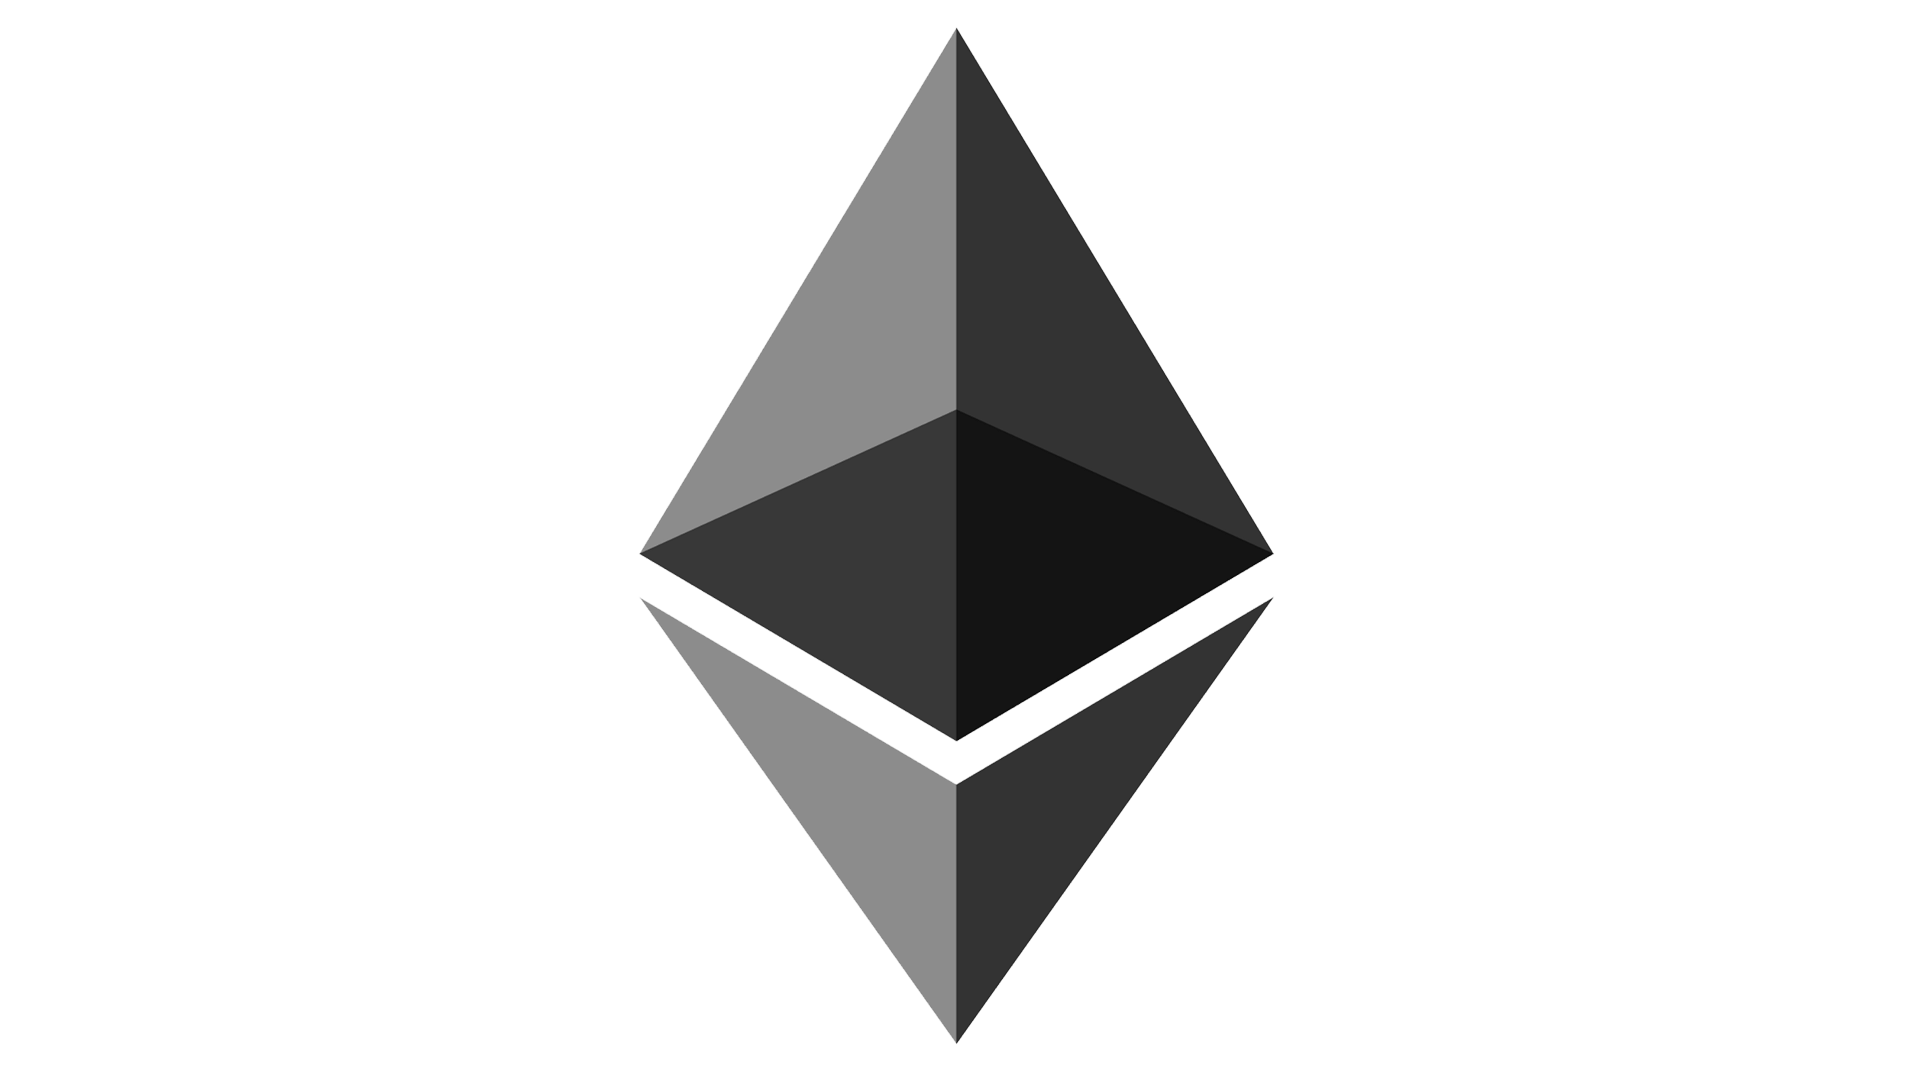 Etherum Logo - Ethereum Logo, Ethereum Symbol, Meaning, History and Evolution